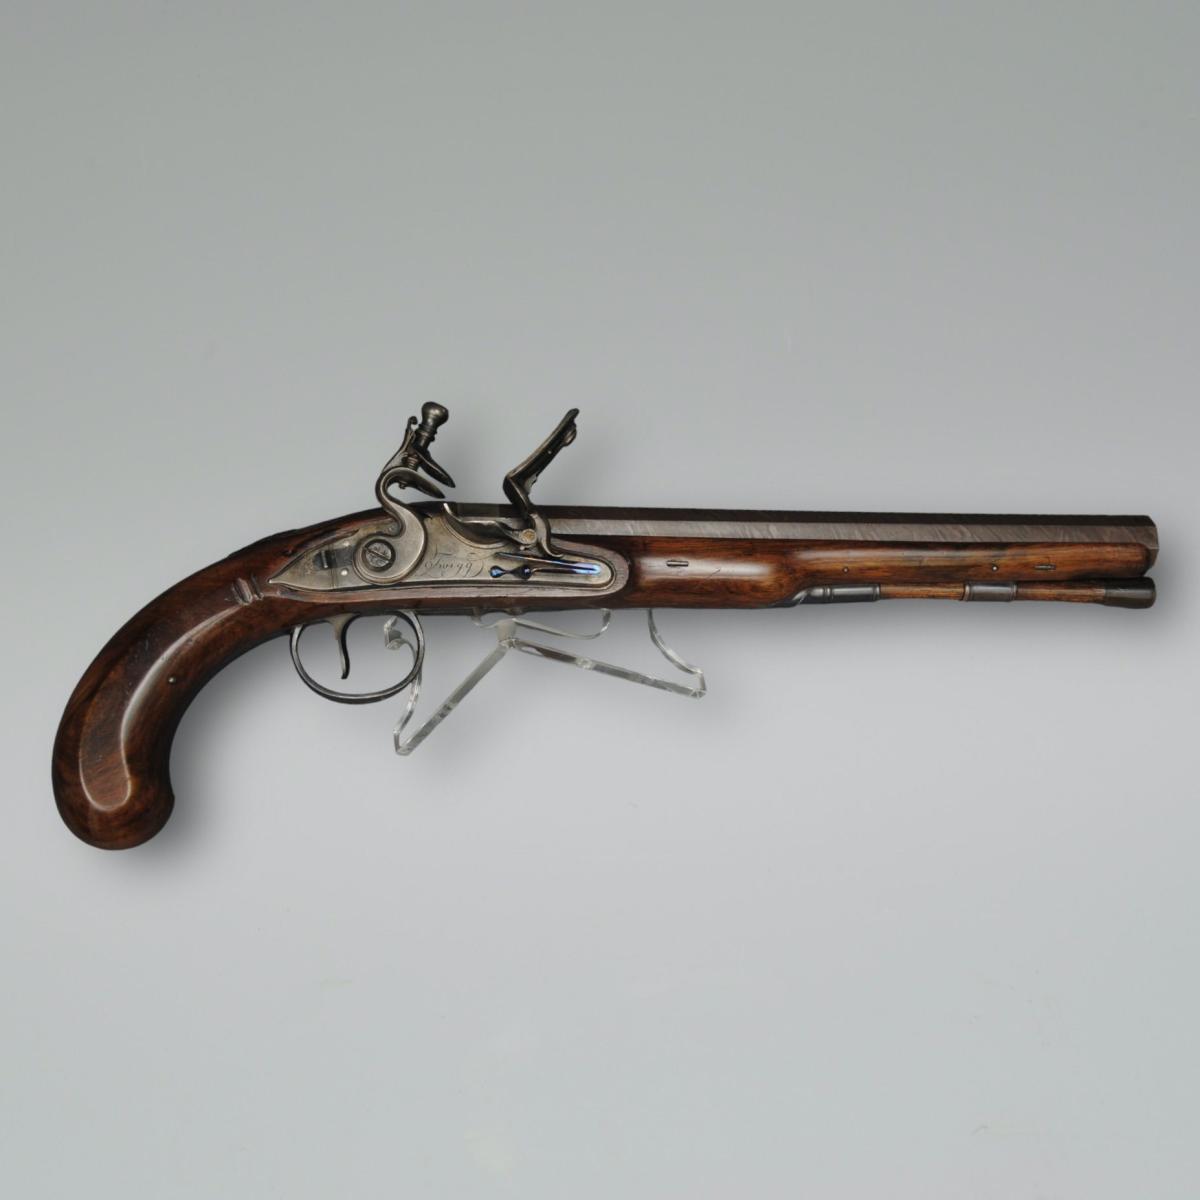 Cased Pair of Flintlock Pistols by Twigg